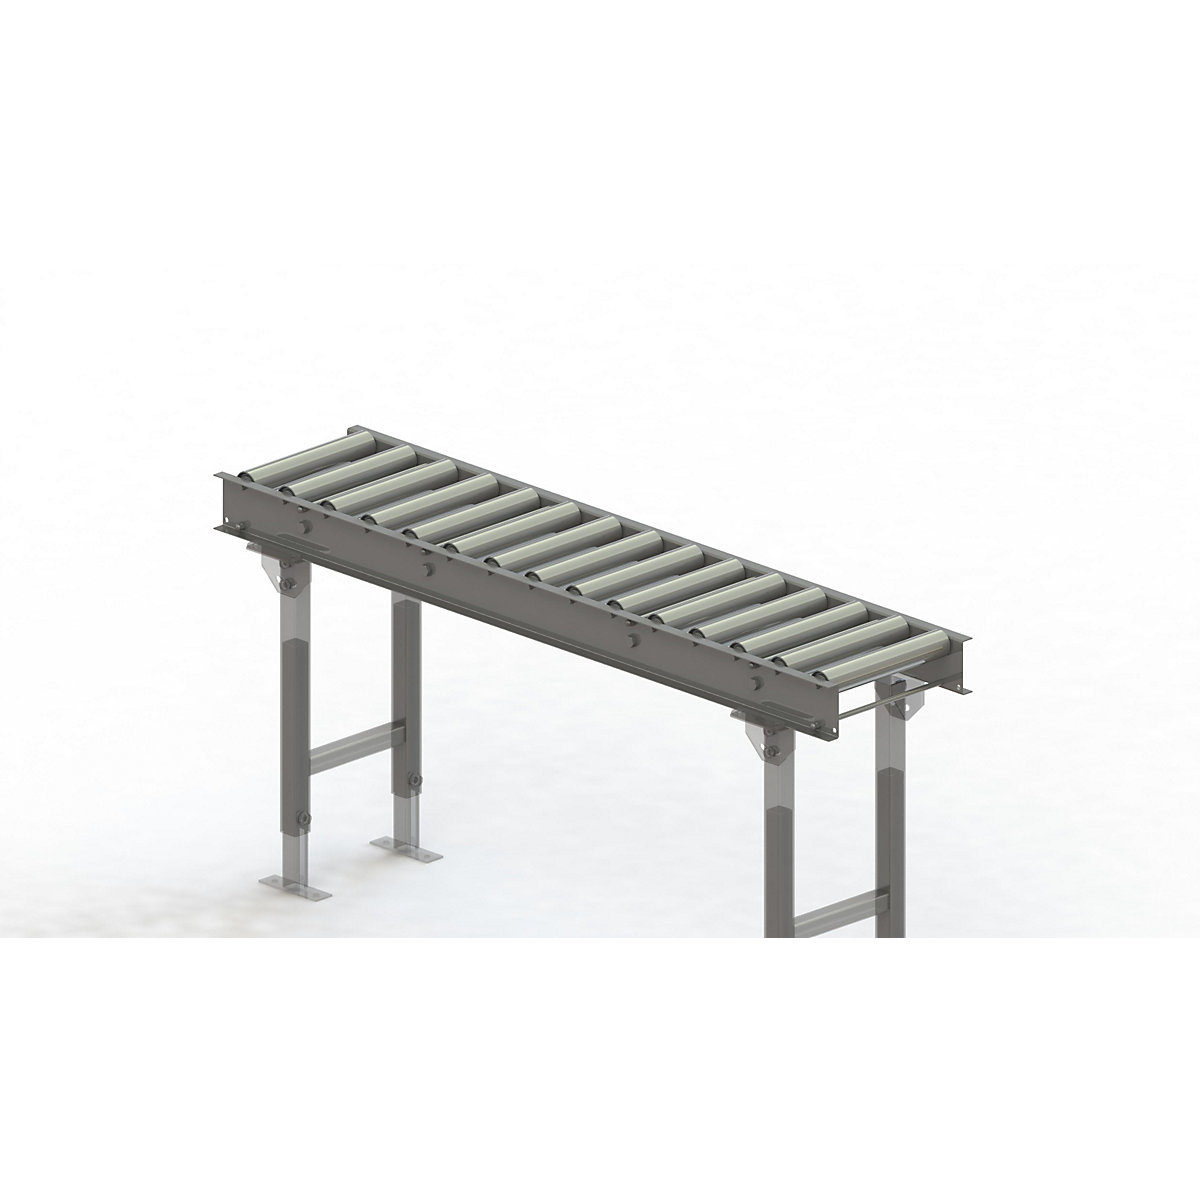 Gura – Roller conveyor, steel frame with zinc plated steel rollers, track width 300 mm, distance between axles 100 mm, length 1.5 m